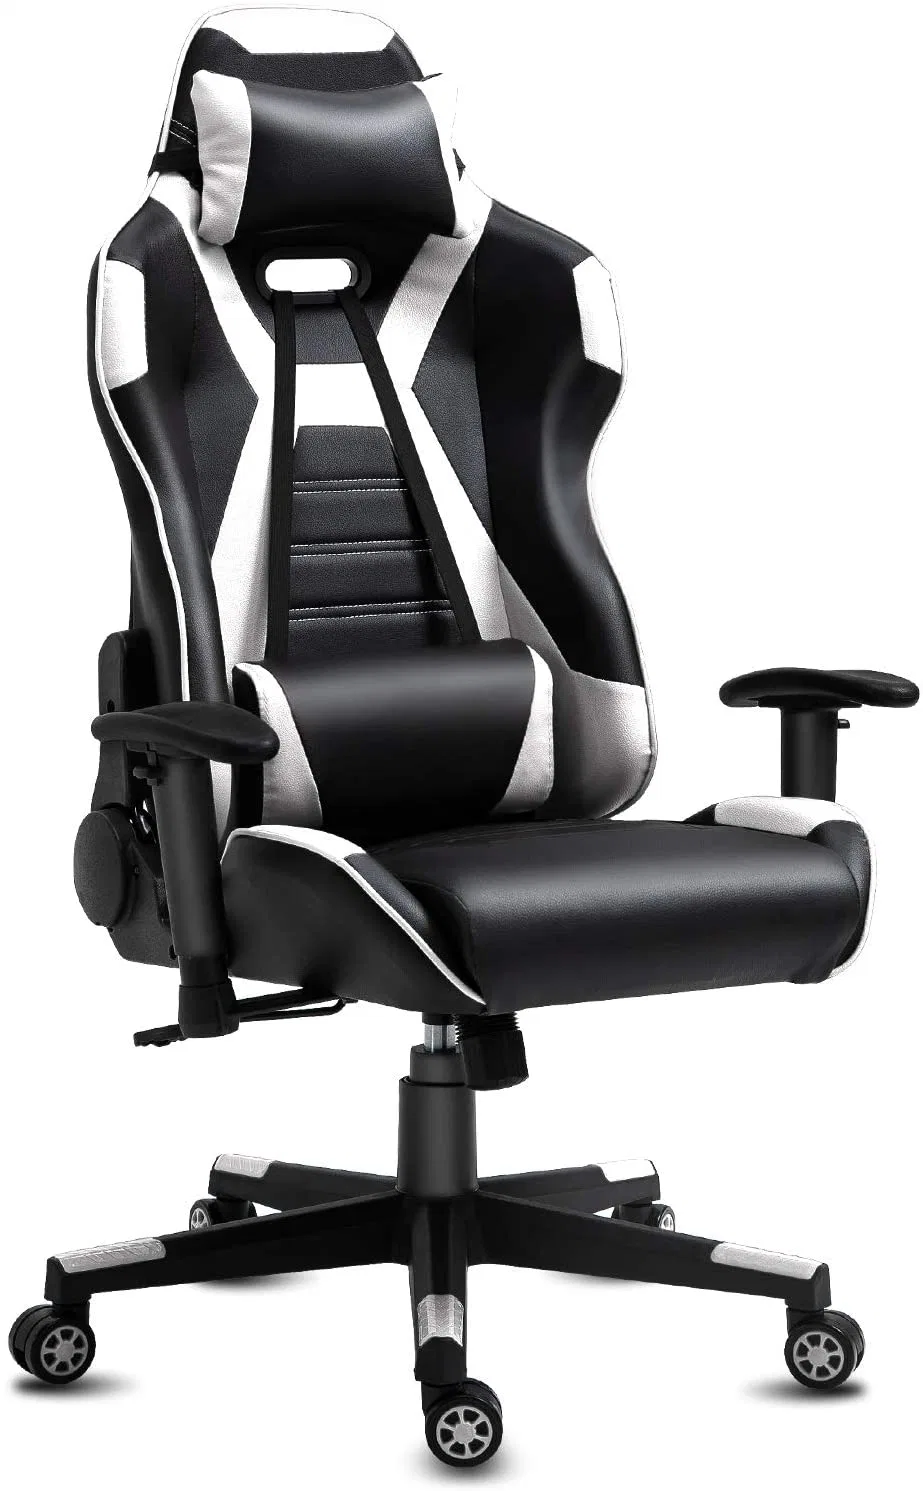 Gaming Chair 2020 New Developed Ergonomics Gaming Chair for Gamer White